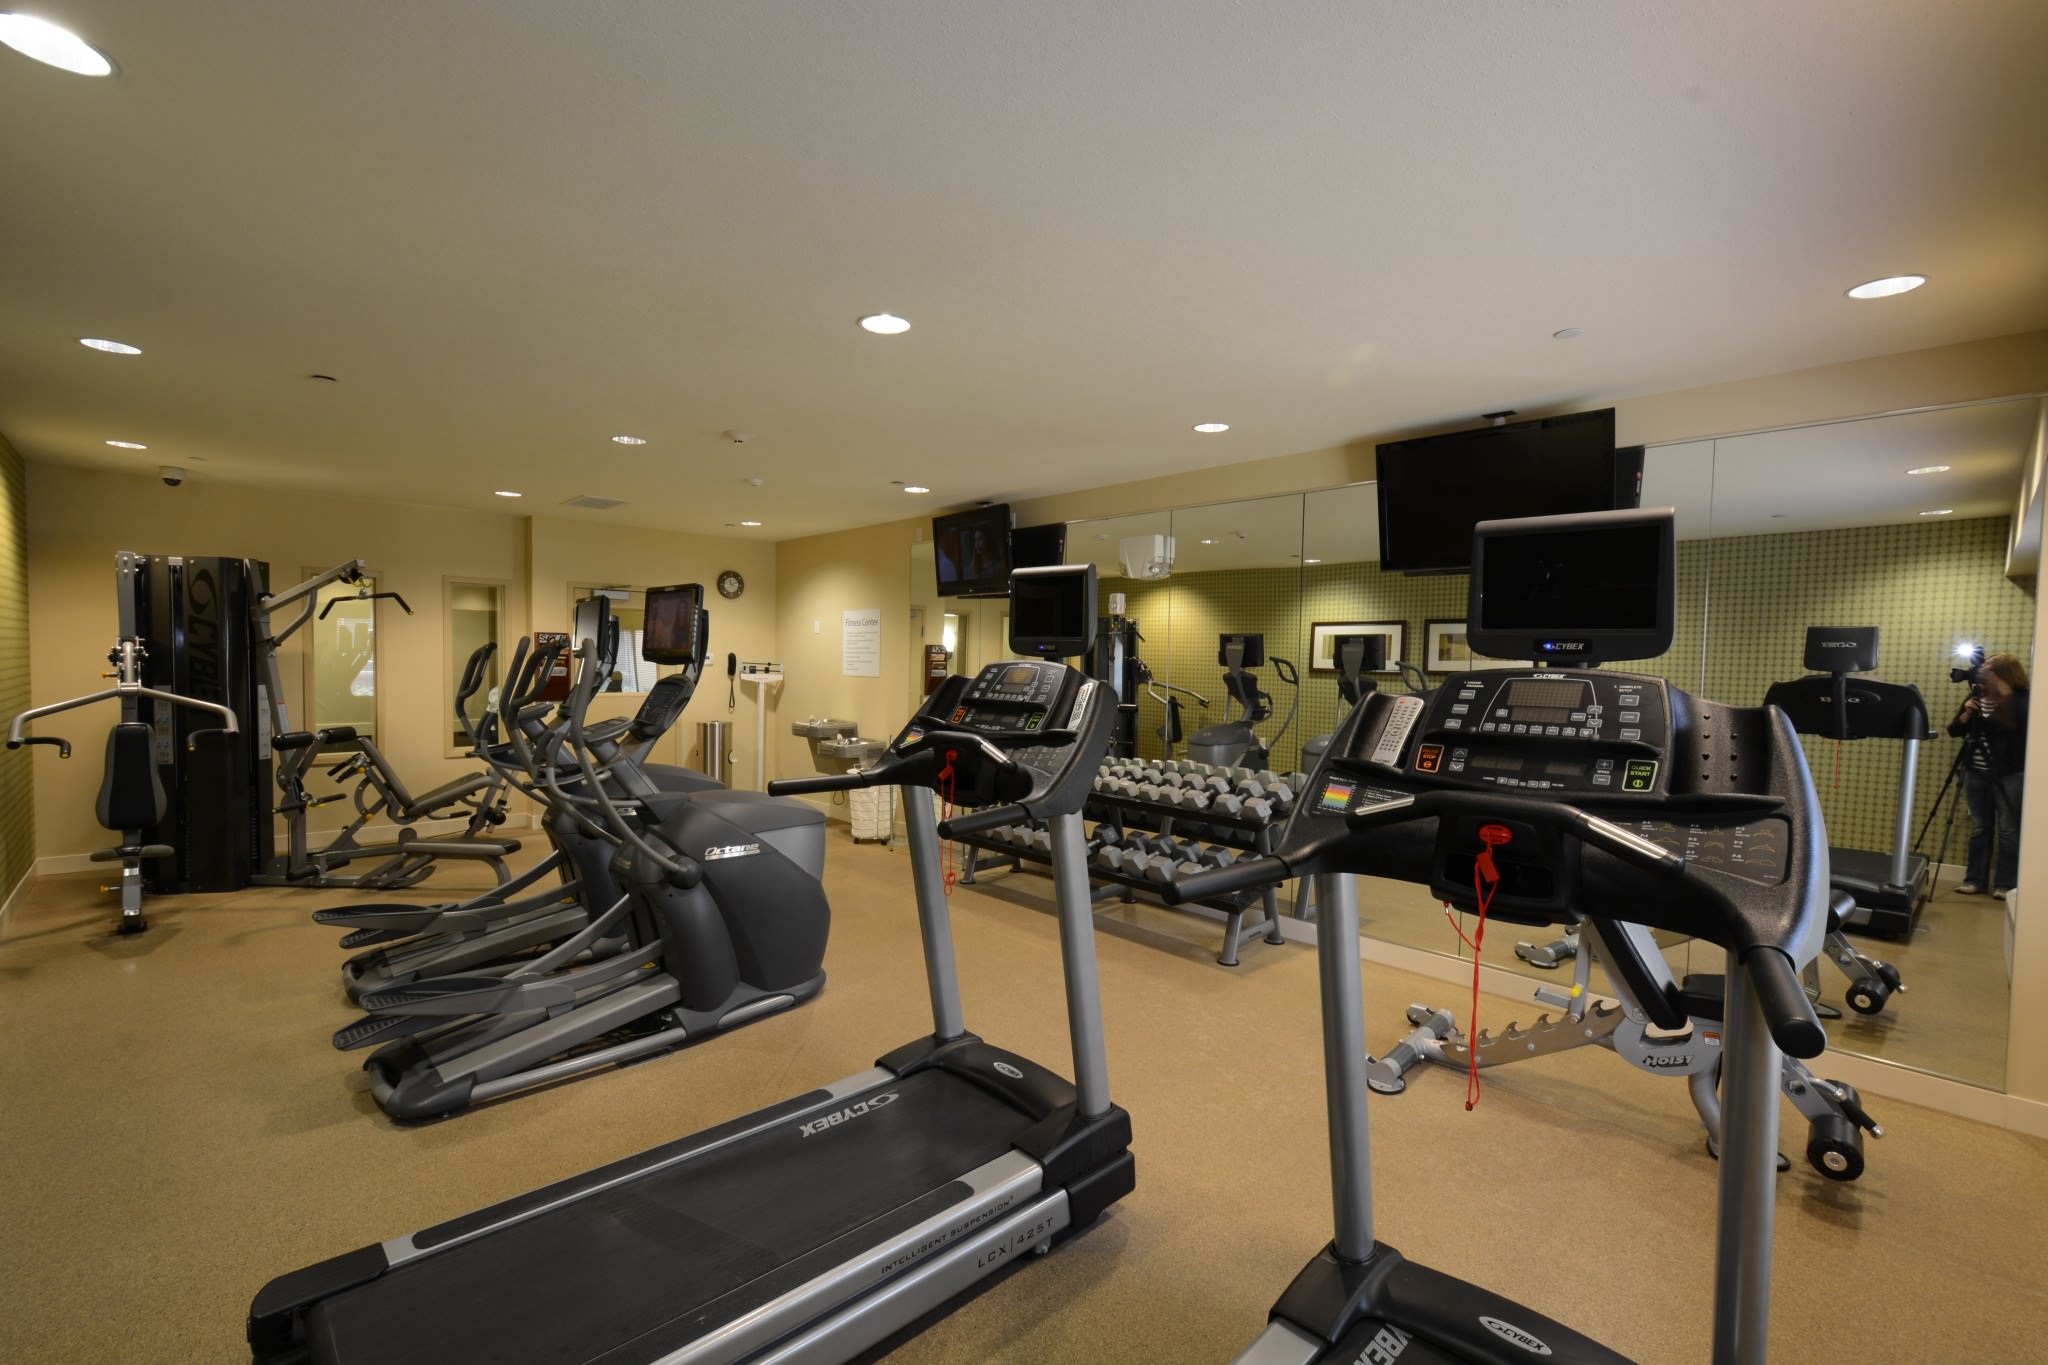 Holiday Inn exercise room